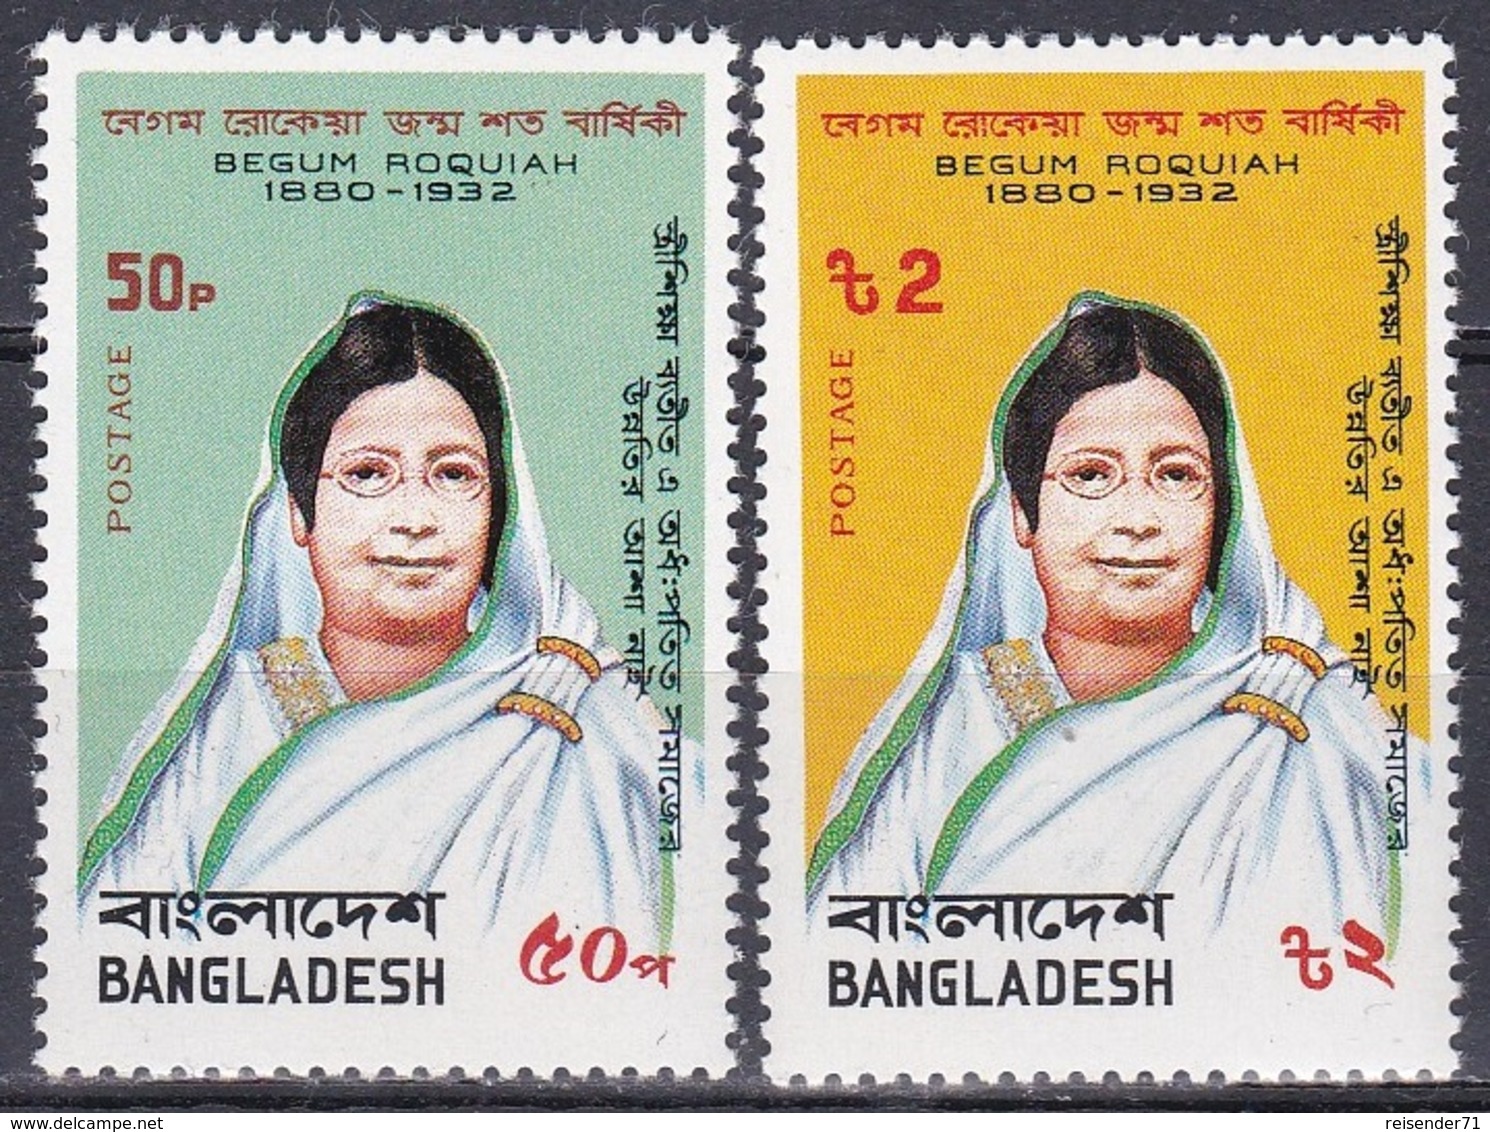 Bangladesch Bangladesh 1980 Persönlichkeiten Frauen Women Emanzipation Emancipation Begum Roquiah, Mi. 142-3 ** - Bangladesh